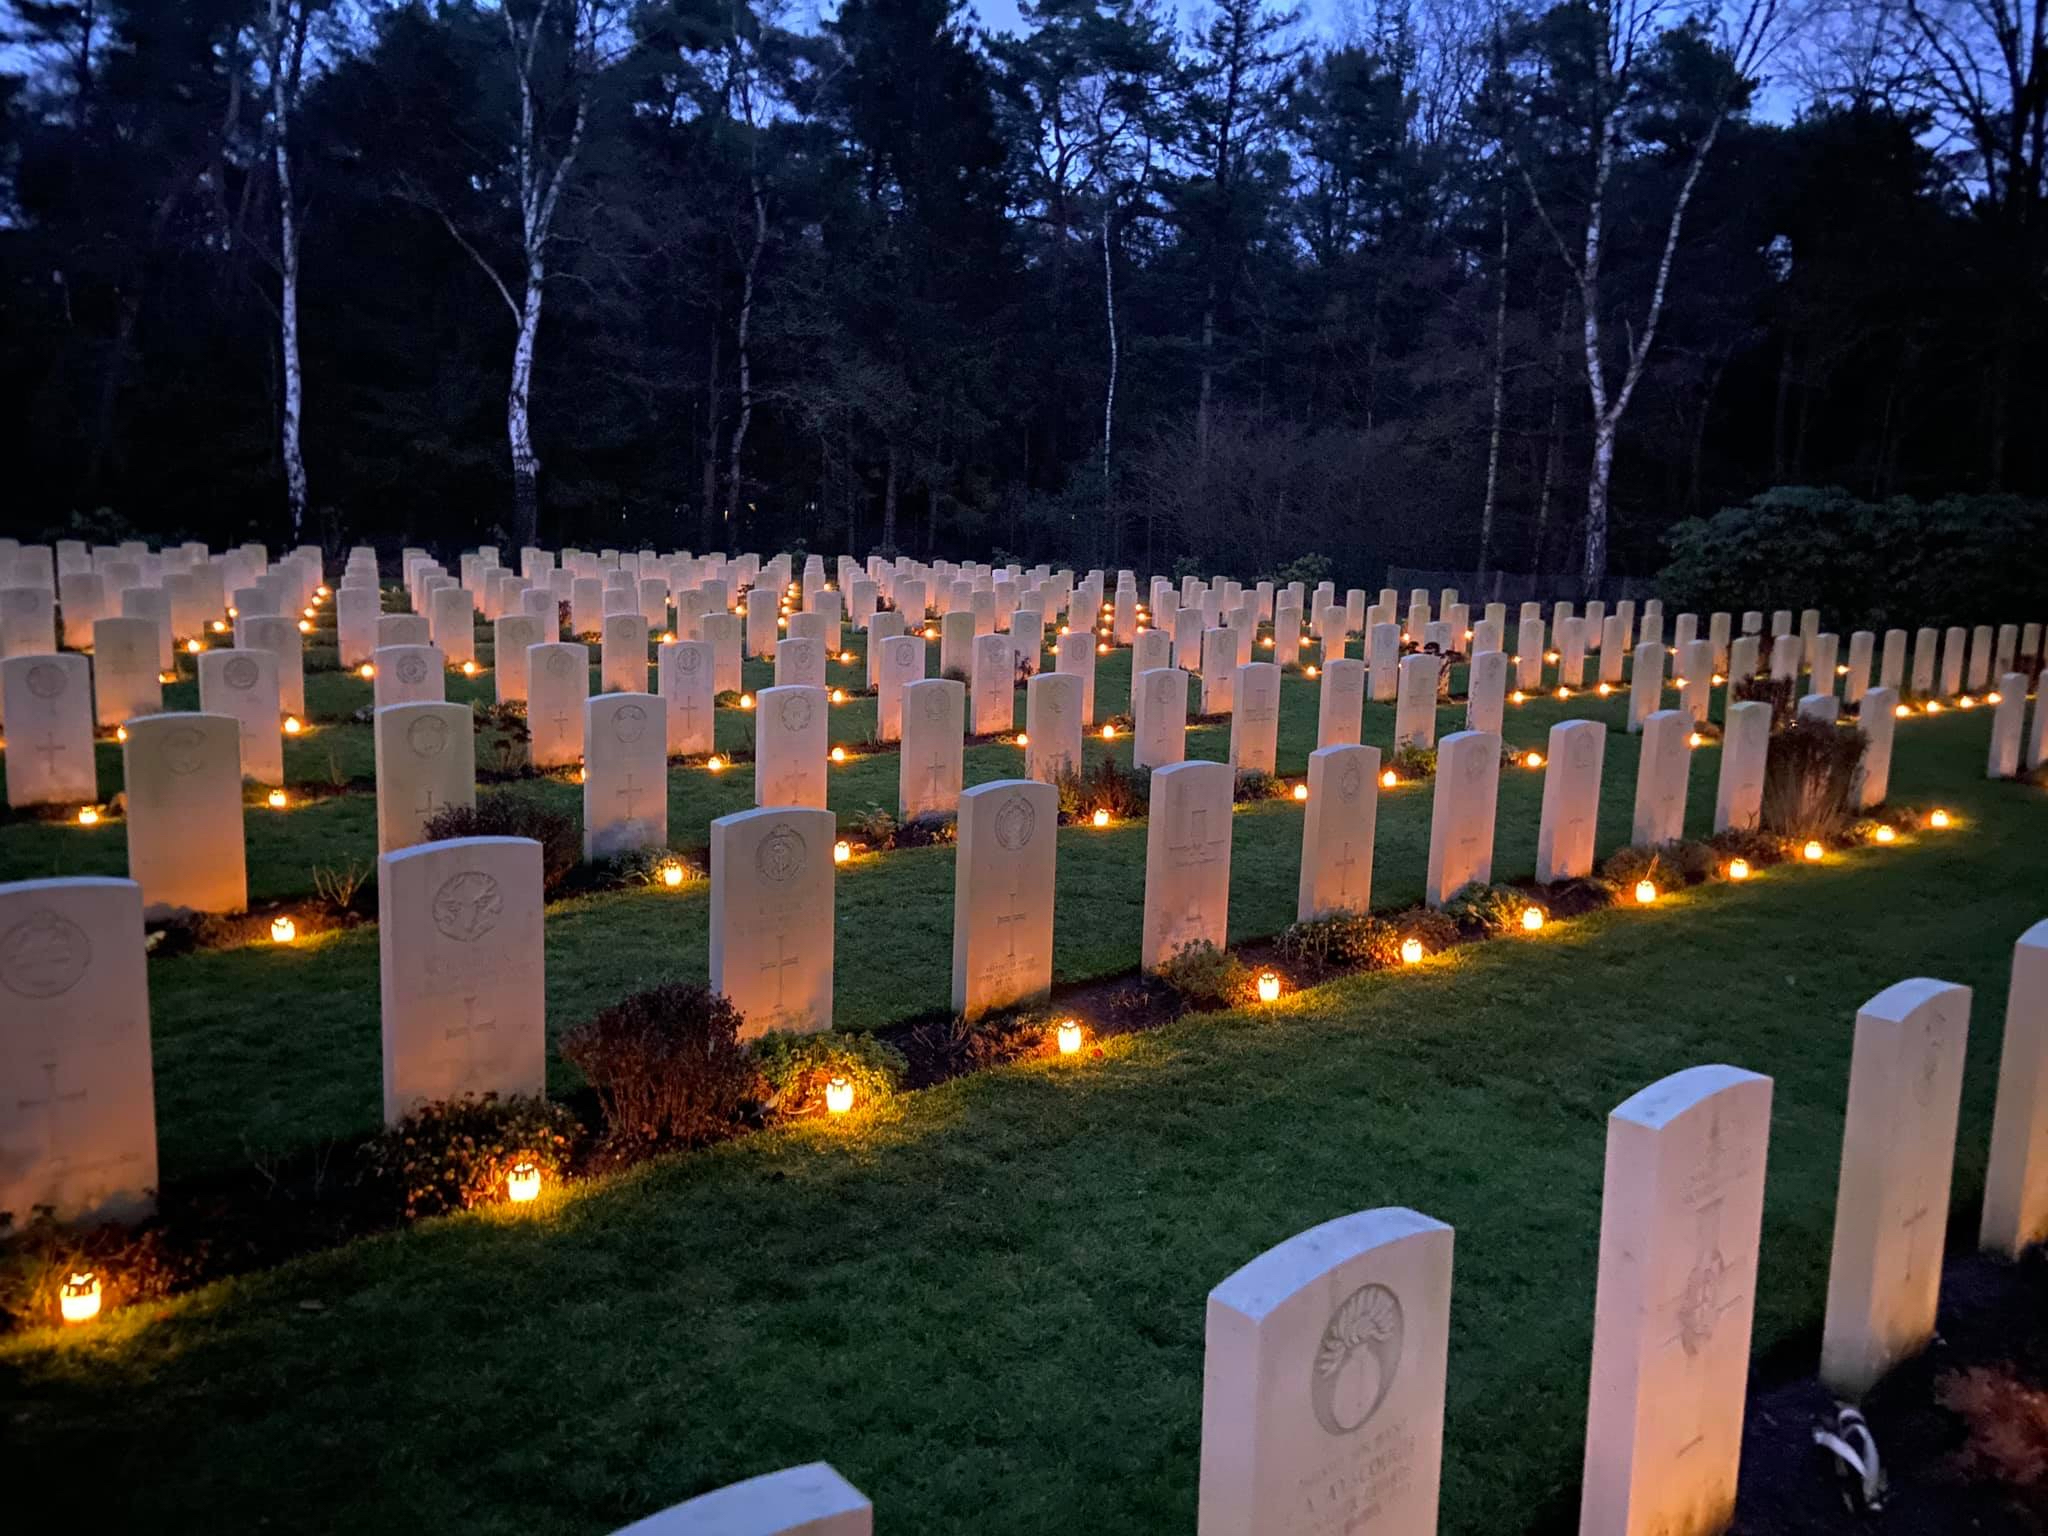 mierlo war cemetery 24 december 2019